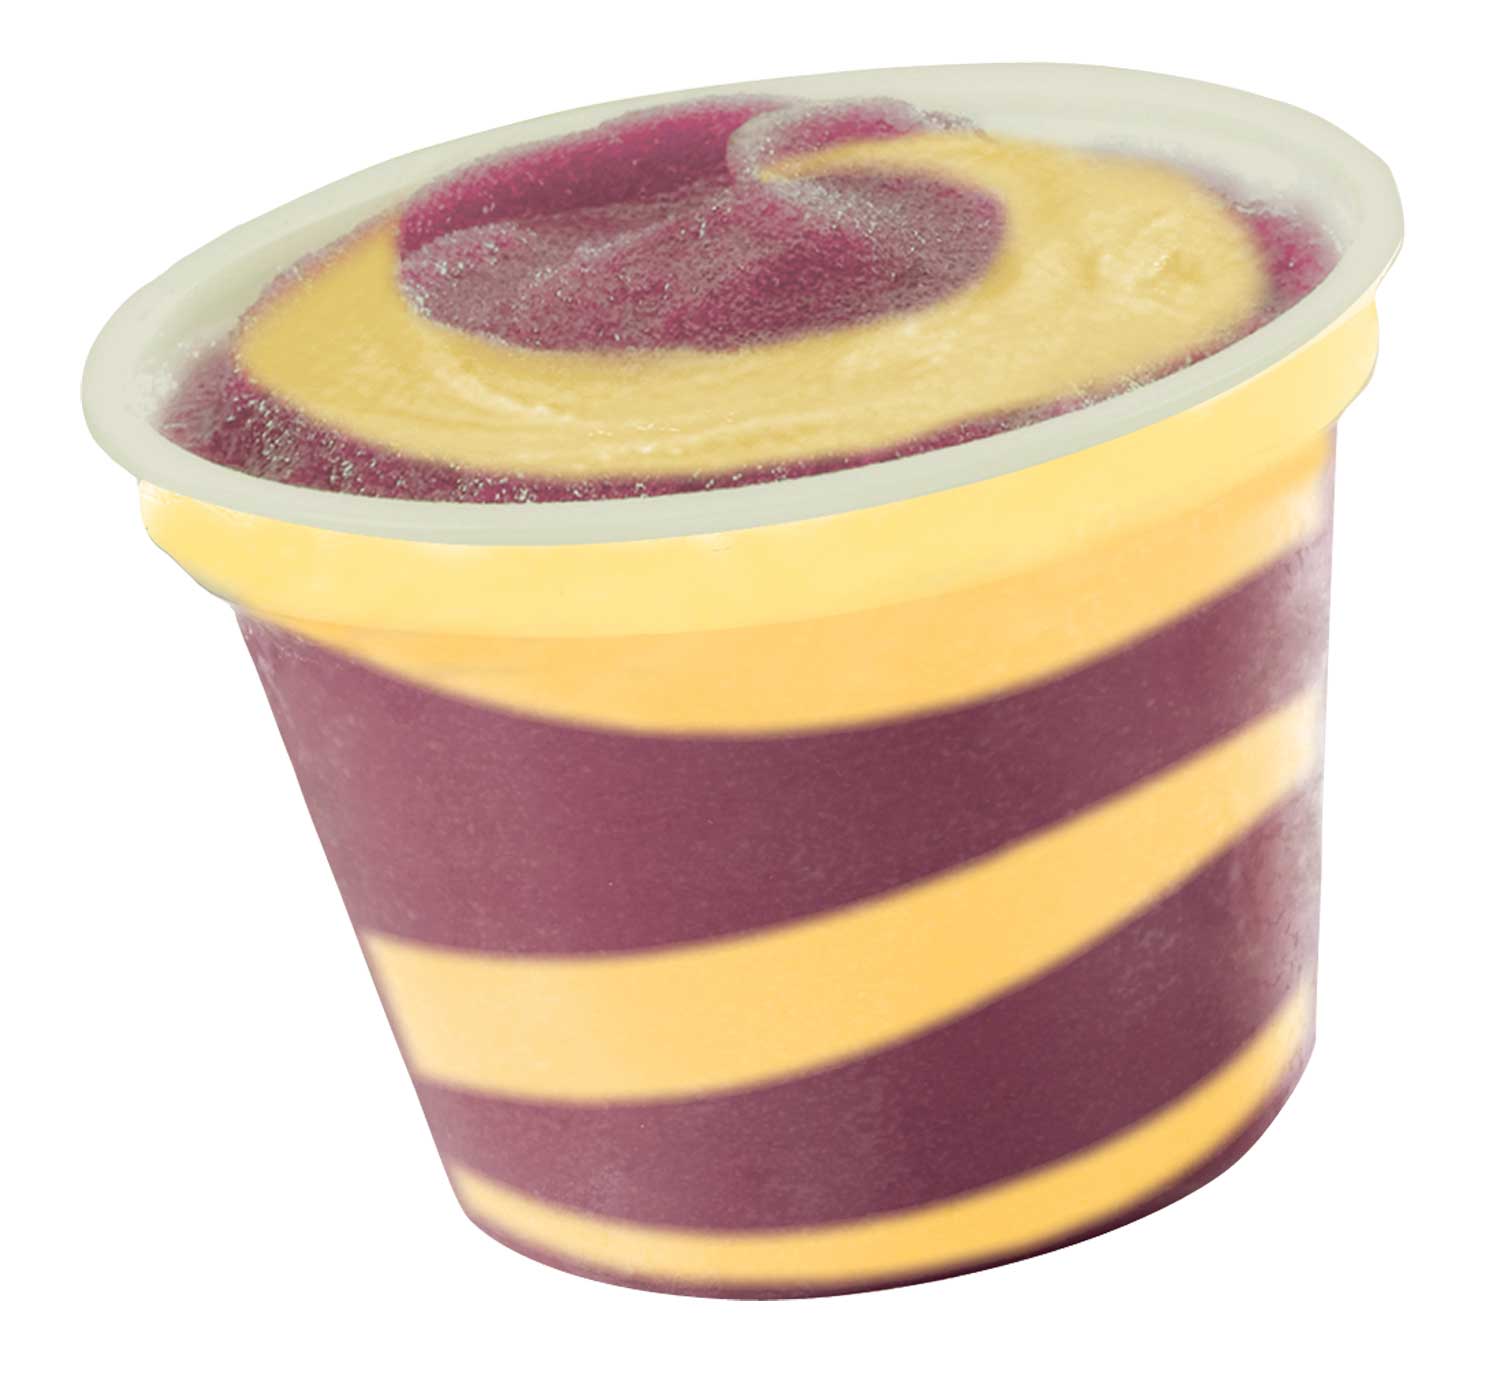 Whole Fruit Mixed Berry and Lemon Swirl Premium Frozen Juice Cup, 4.4 ounce -- 96 per case